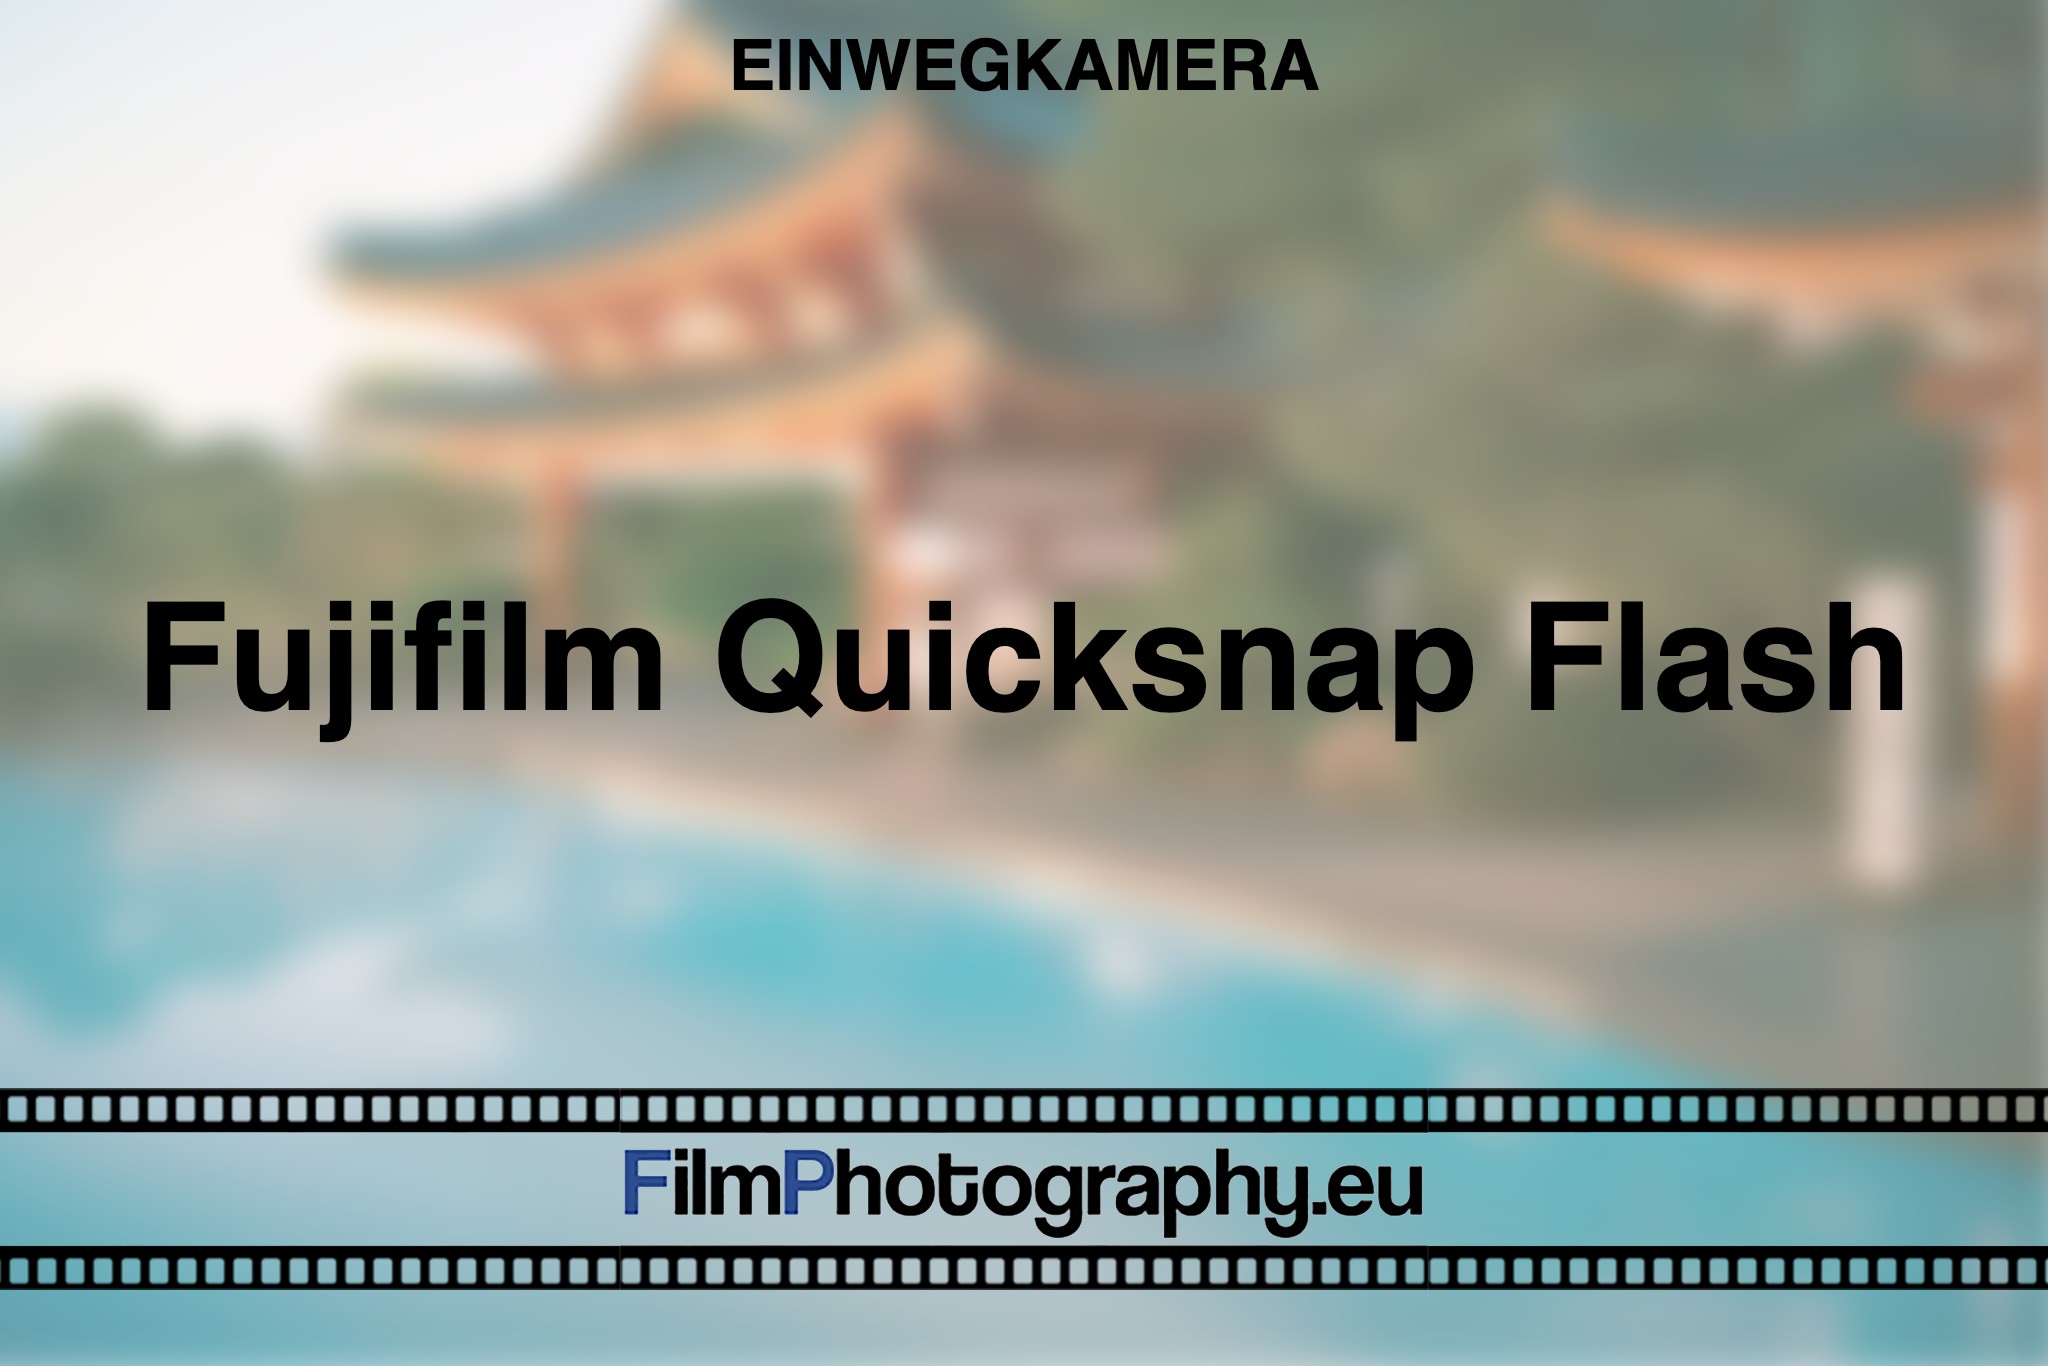 fujifilm-quicksnap-flash-einwegkamera-bnv